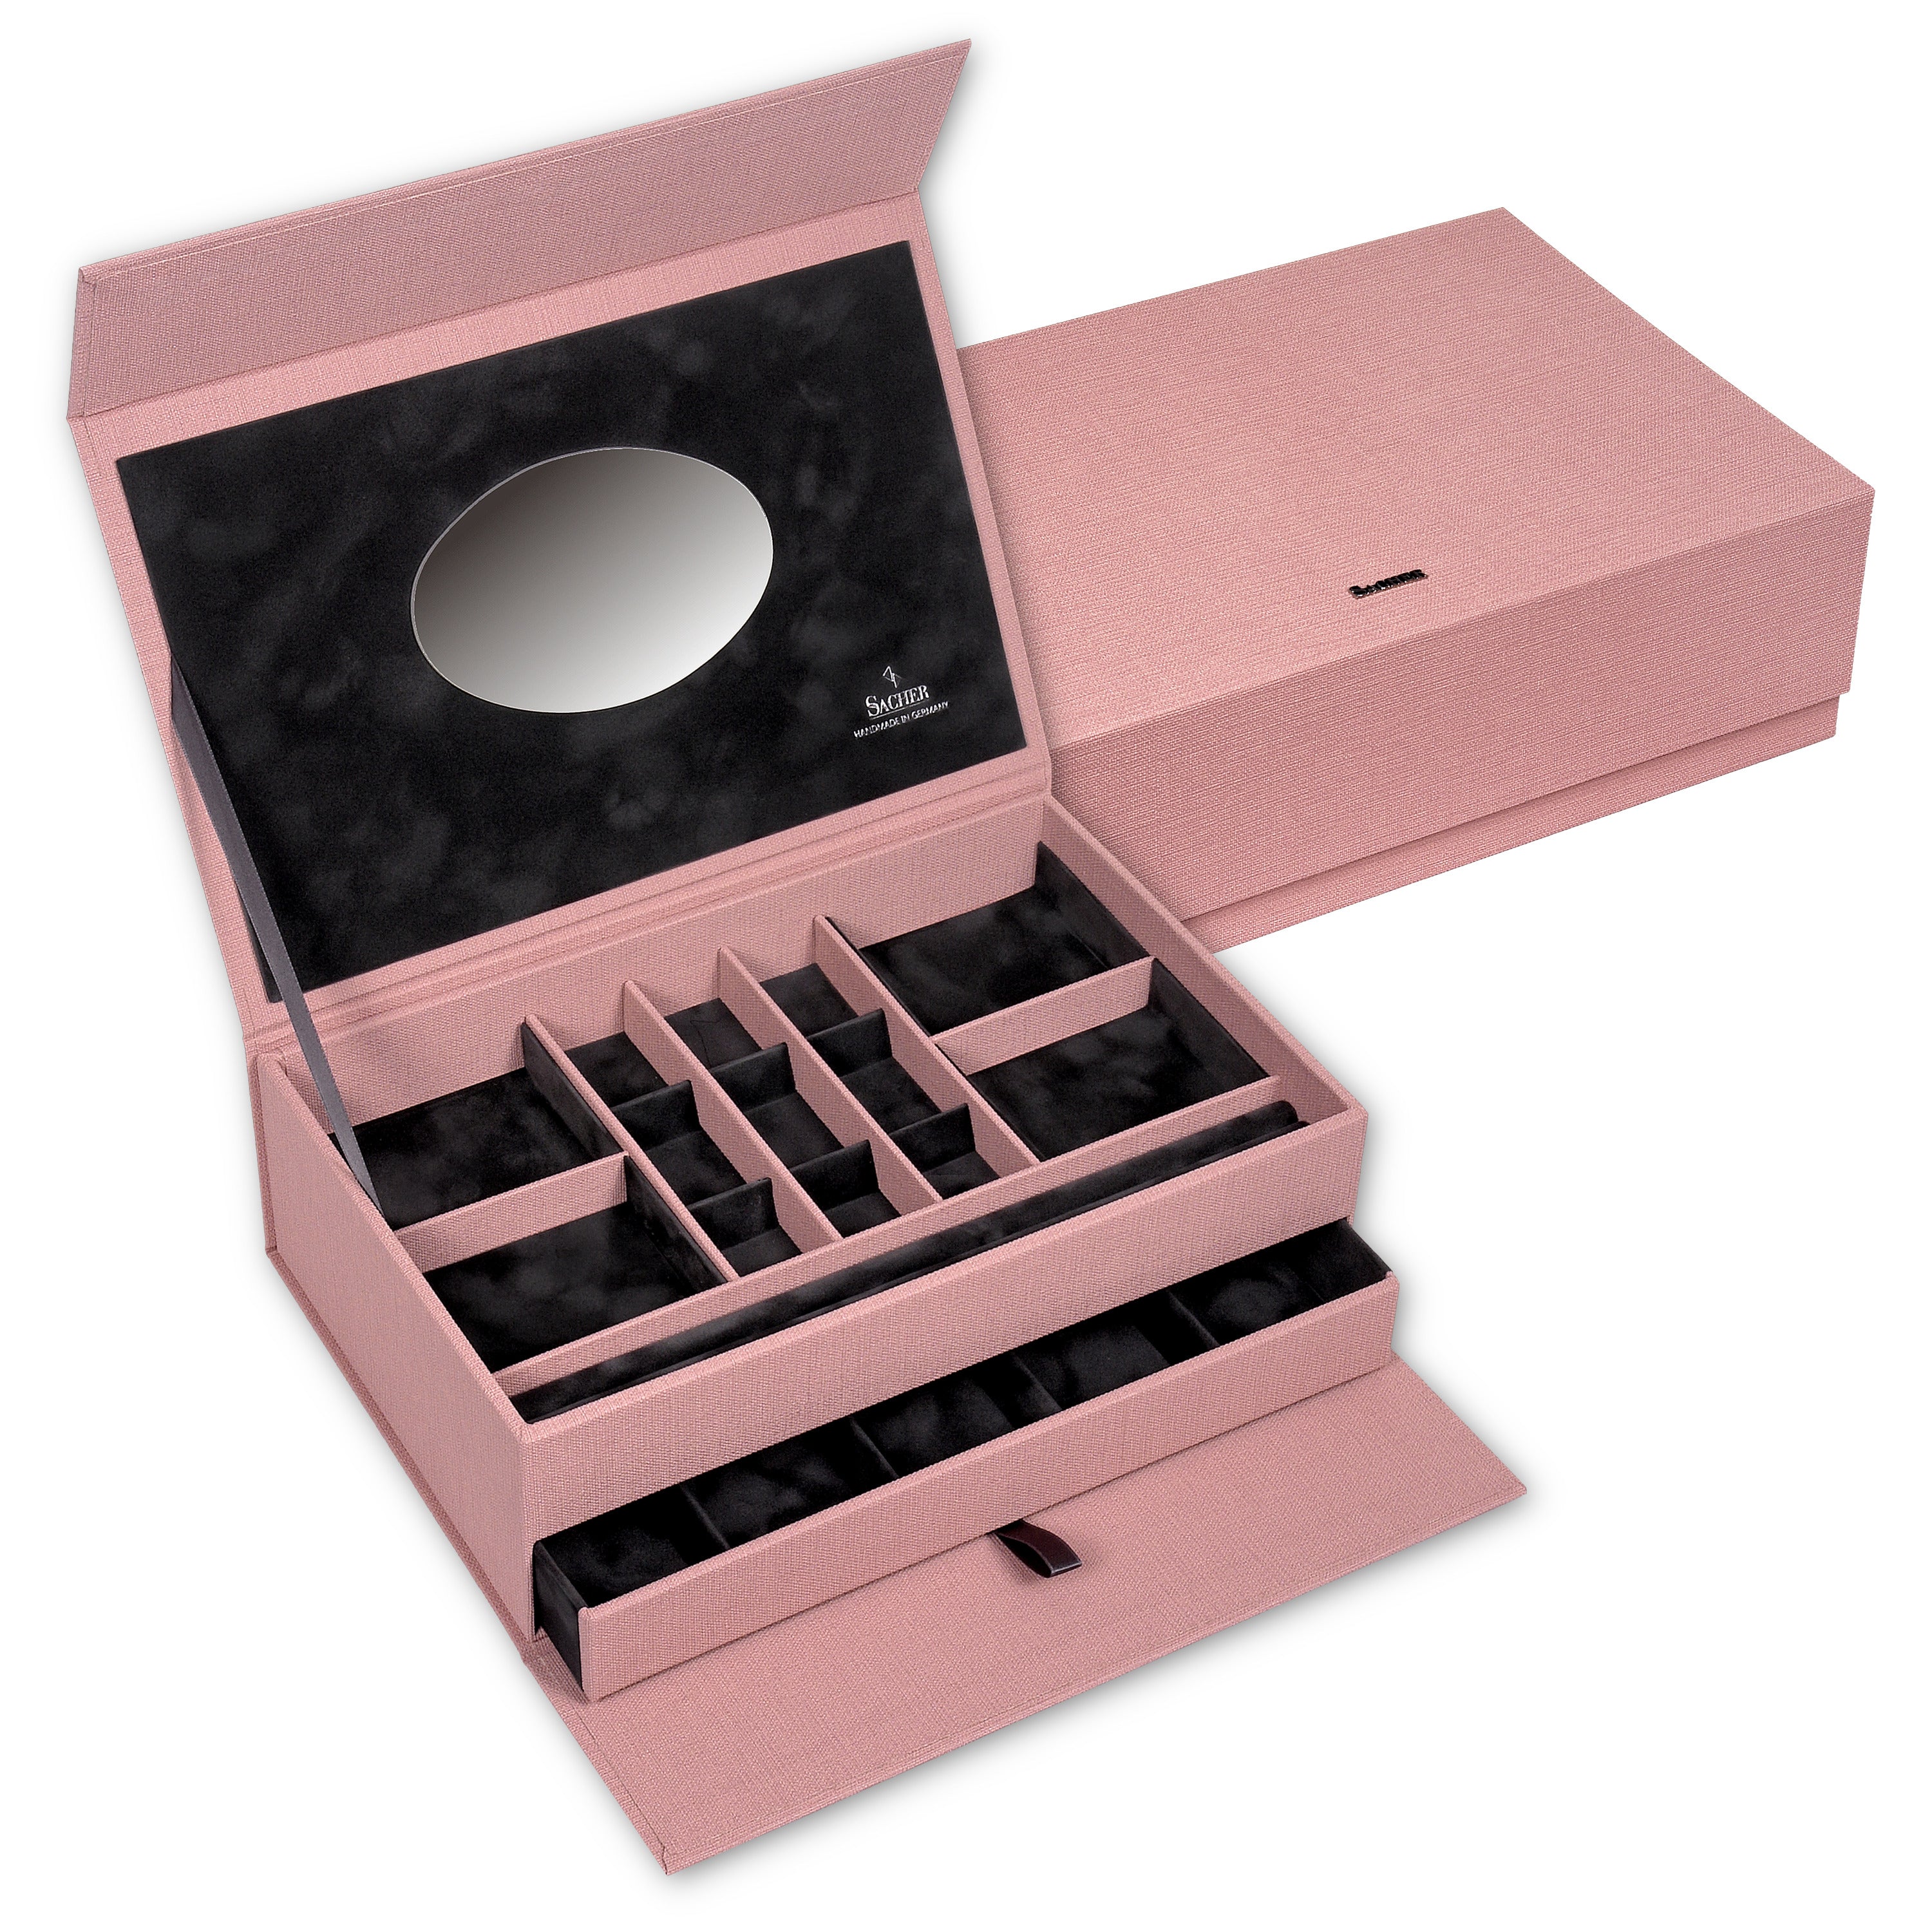 Schmuckbox pastello / rosa – SACHER Manufaktur Store 1846 | Offizieller